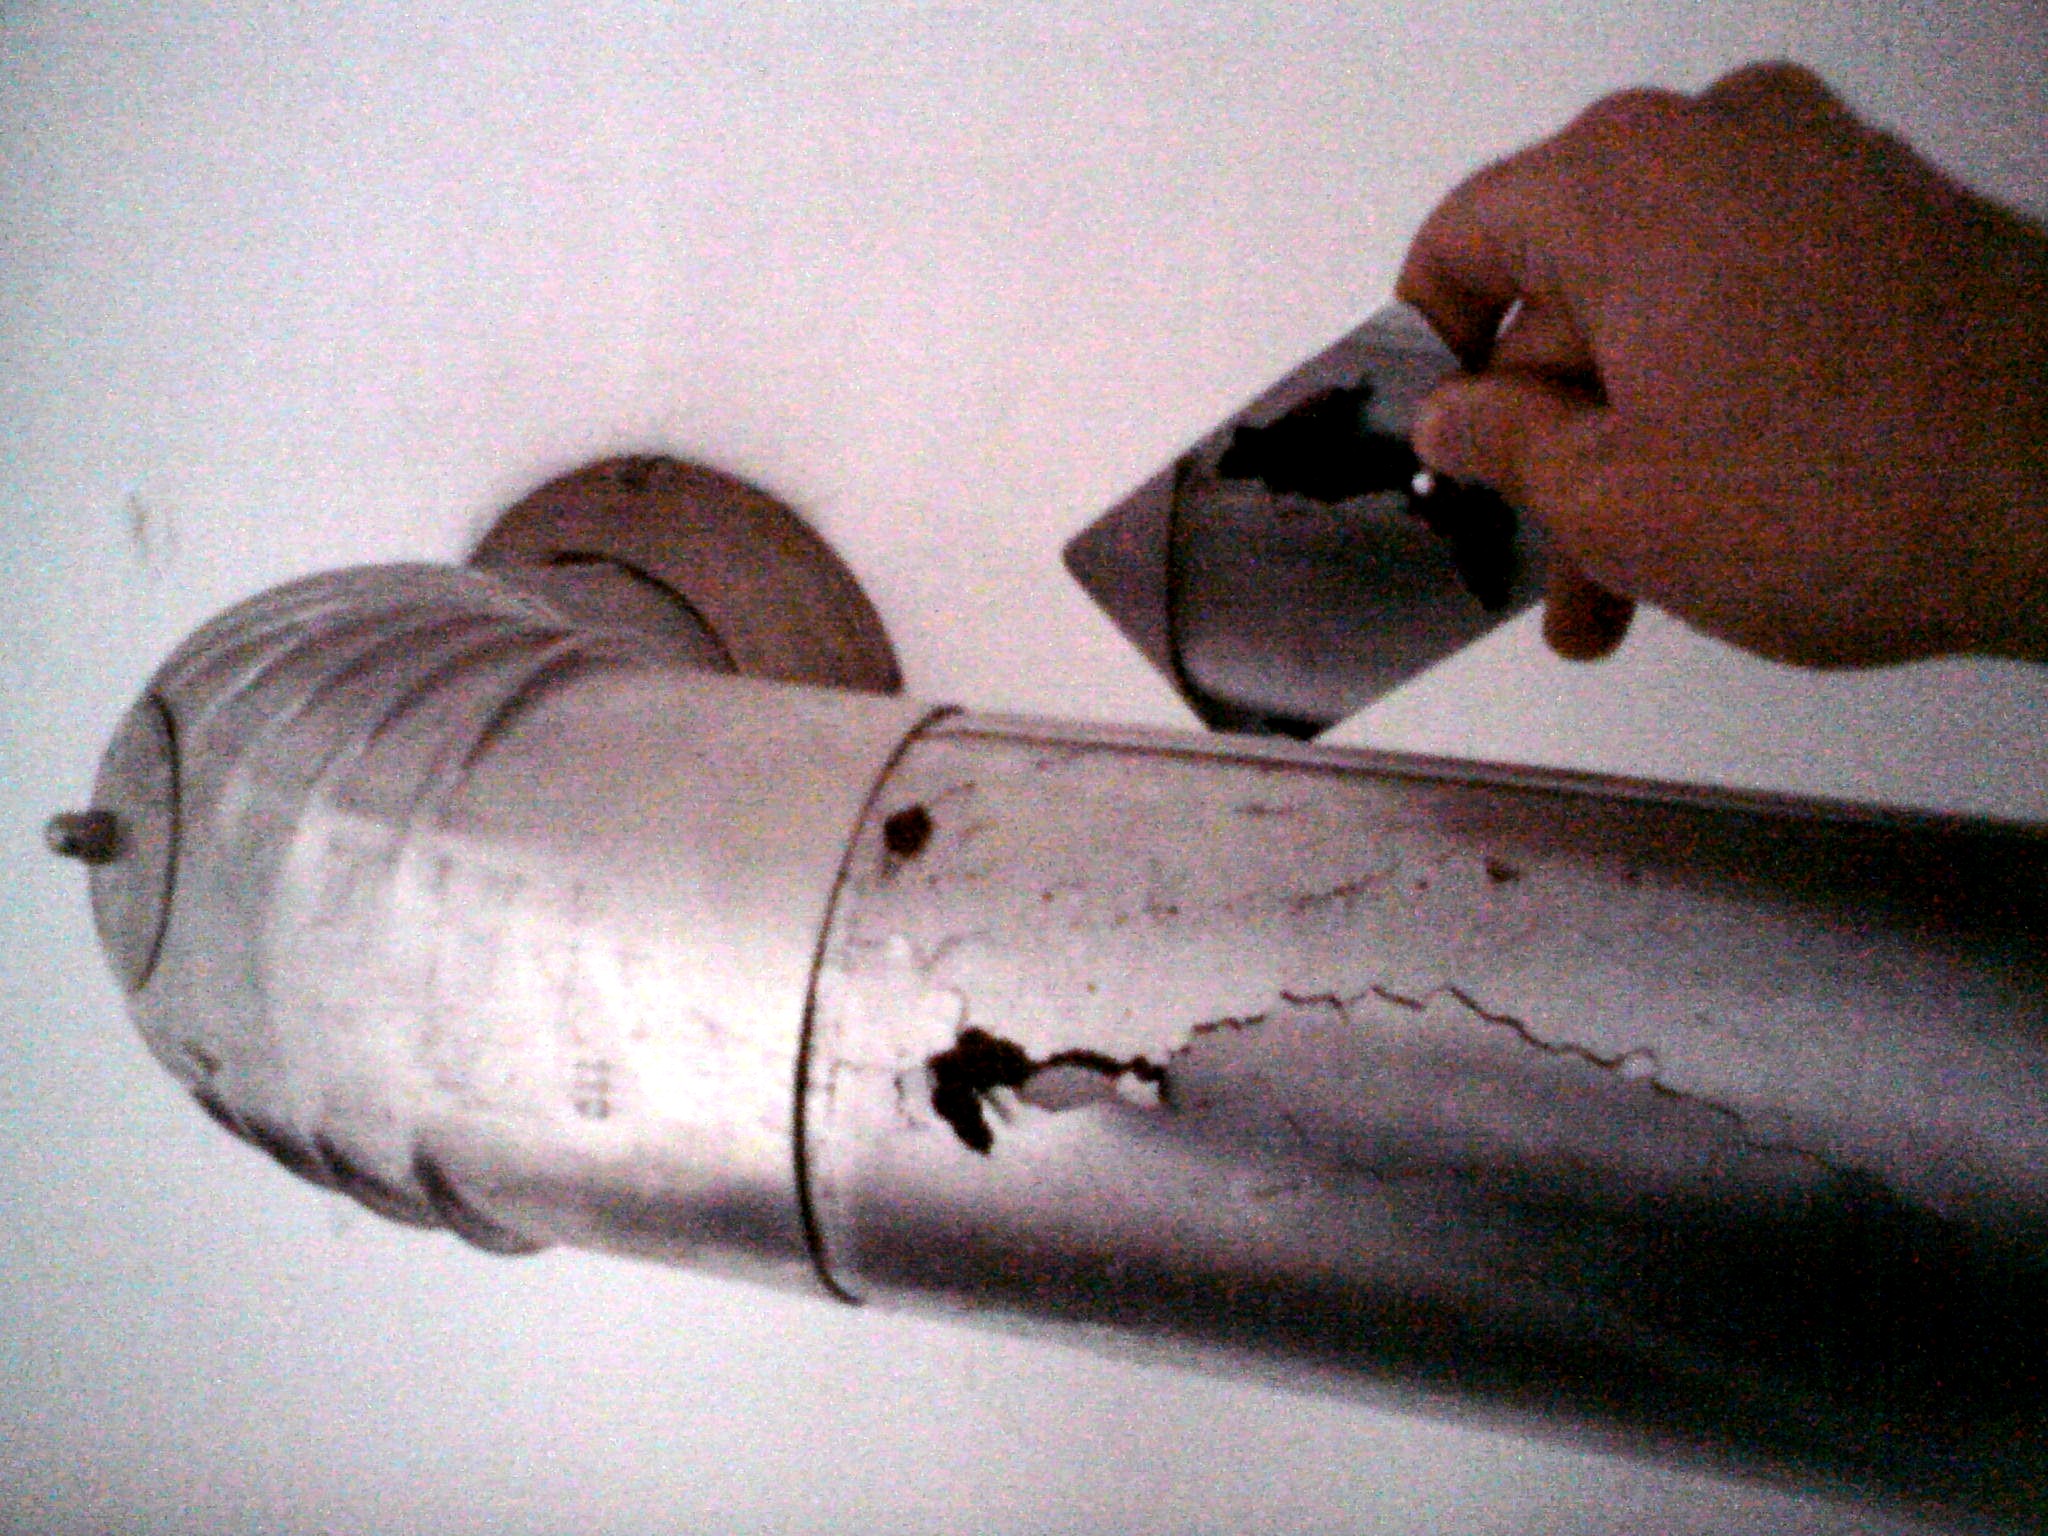 File:Defektes Abgasrohr einer Gas-Heizung.jpg - Wikimedia Commons